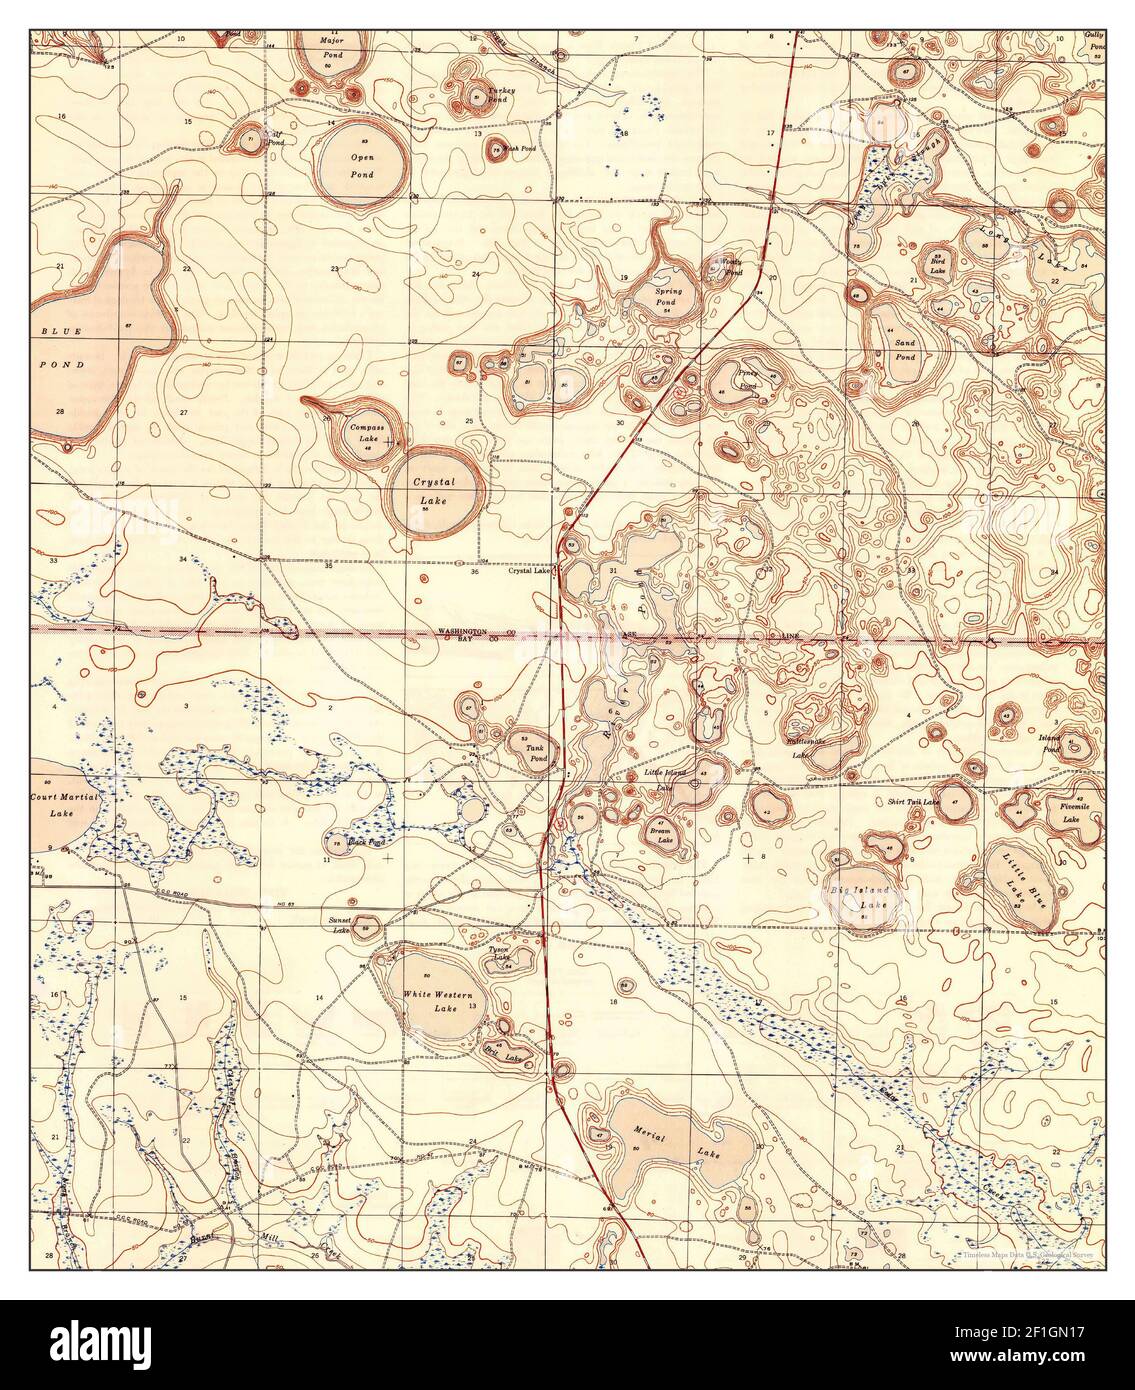 Crystal Lake, Florida, map 1945, 1:31680, United States of America by Timeless Maps, data U.S. Geological Survey Stock Photo